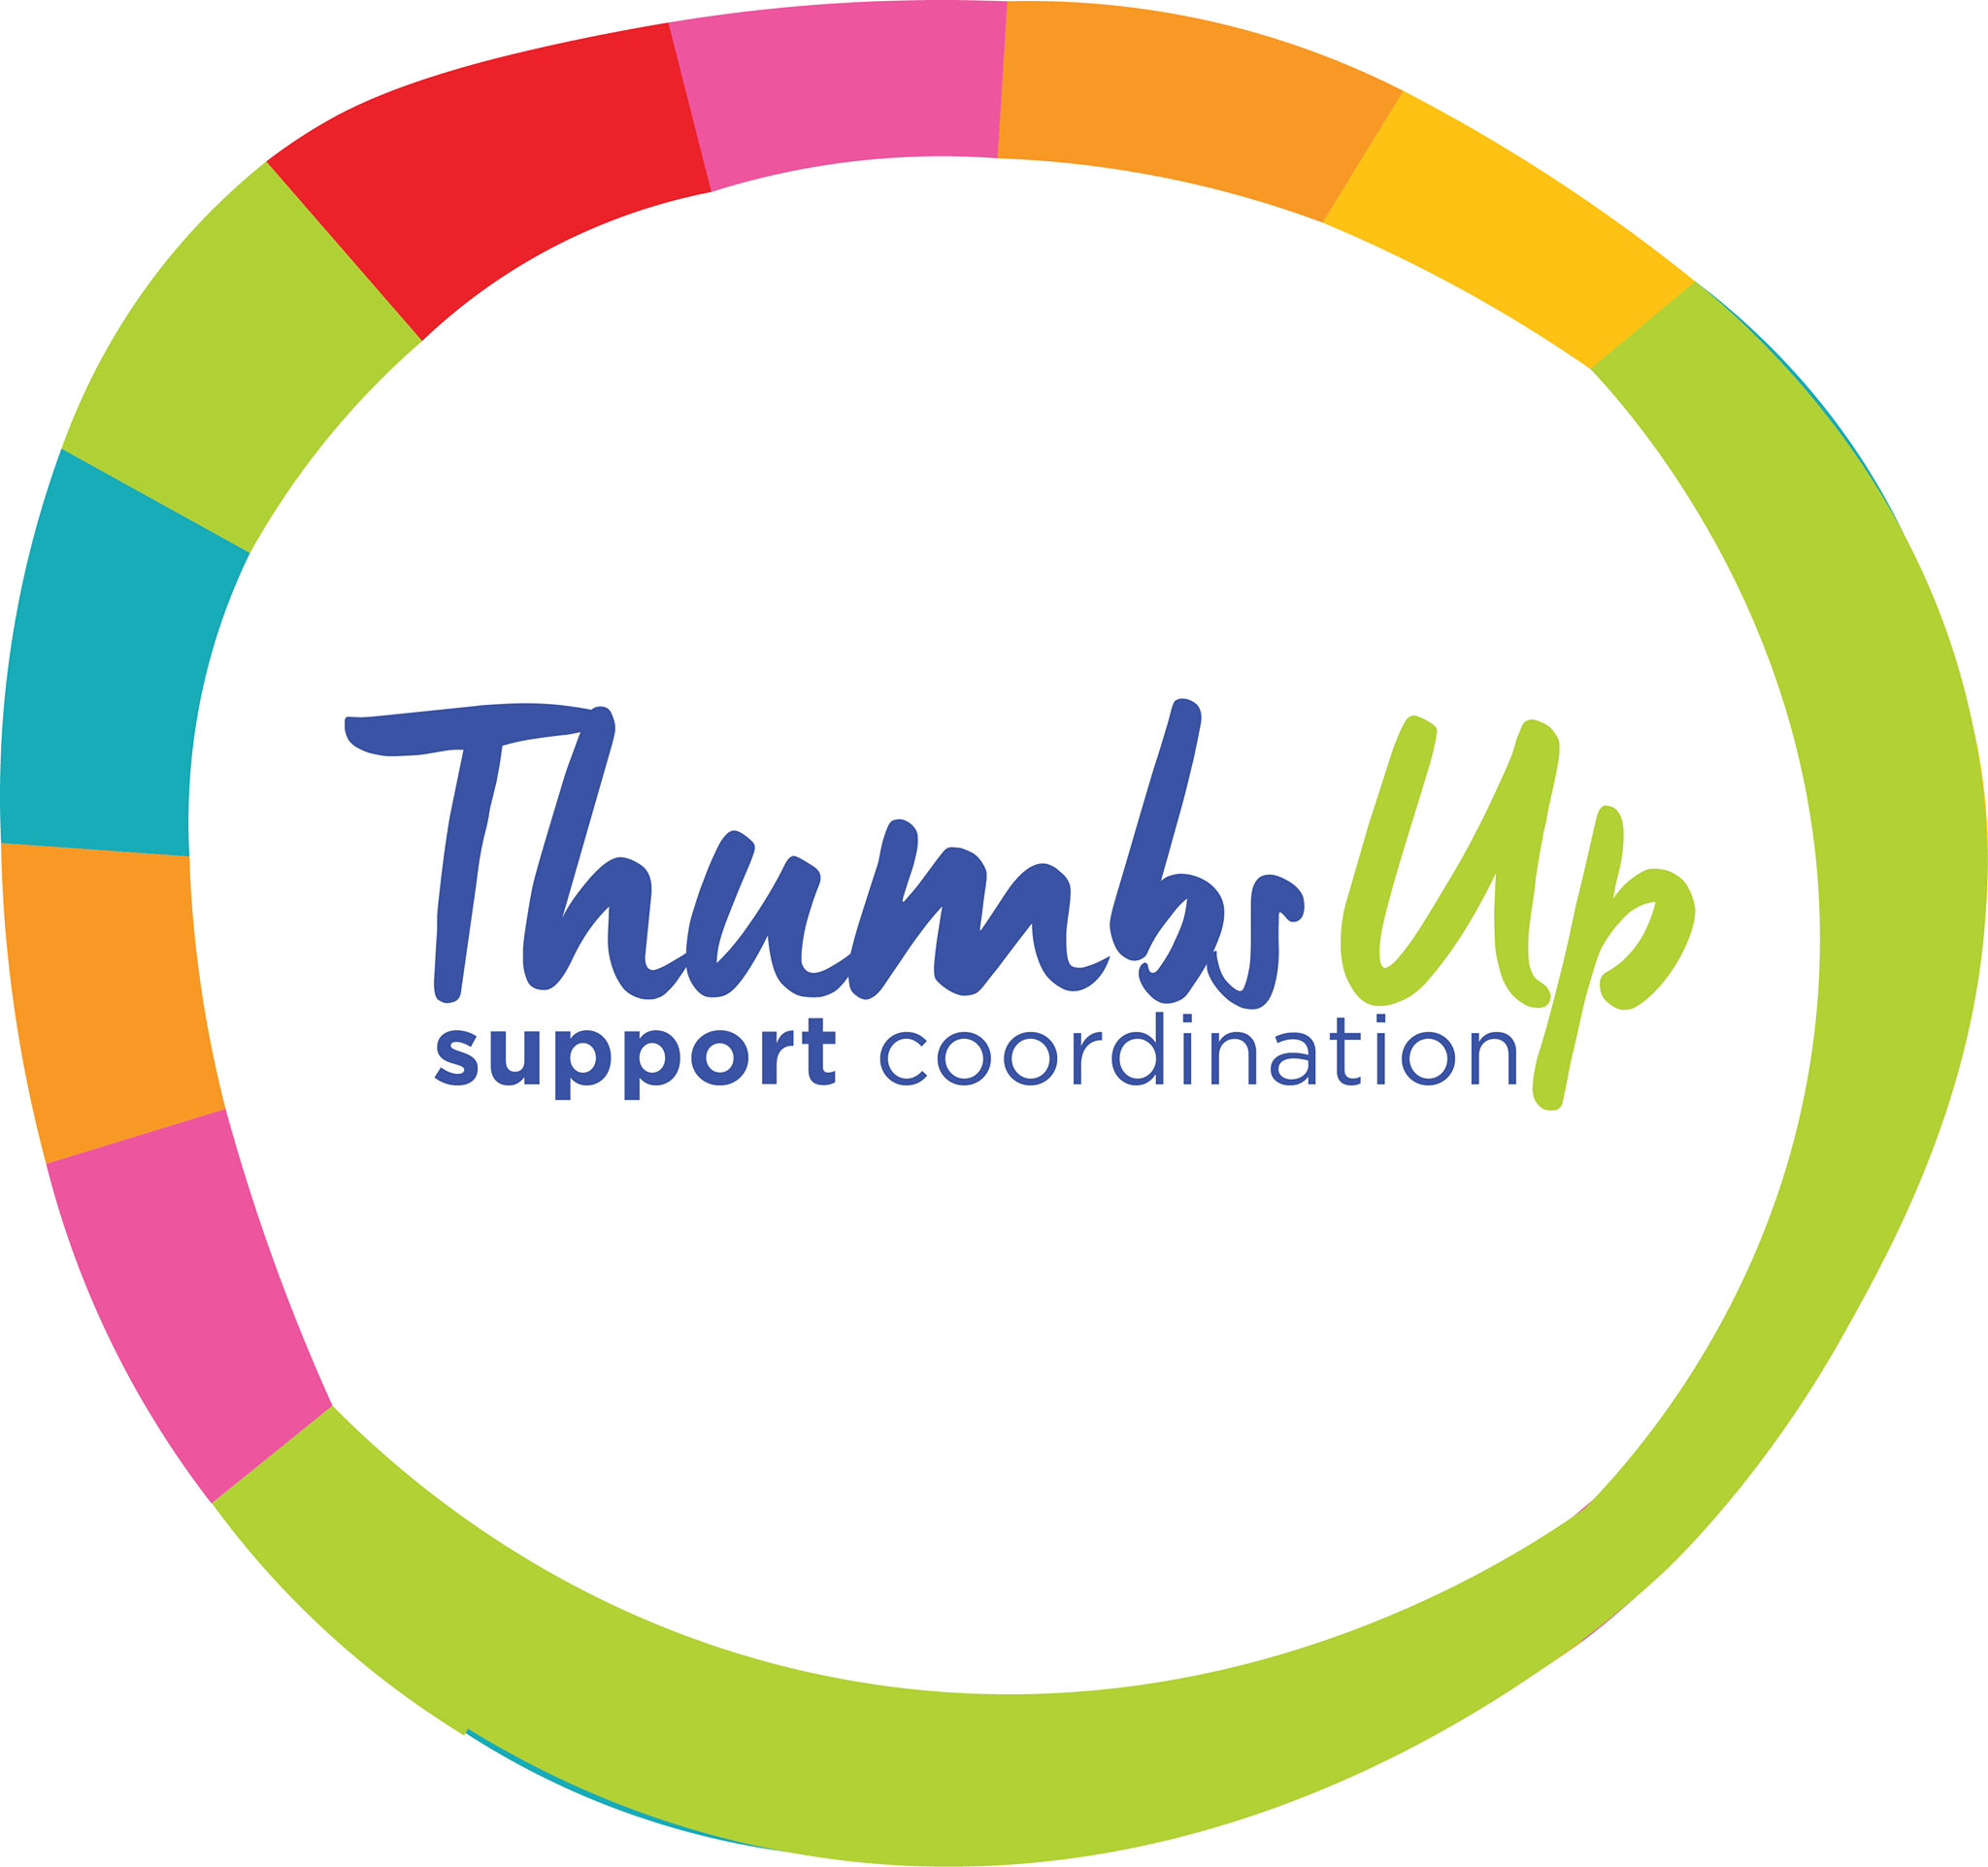 https://www.seoforsmallbusiness.com.au/wp-content/uploads/2022/08/thumbs-up-support-coordination.png